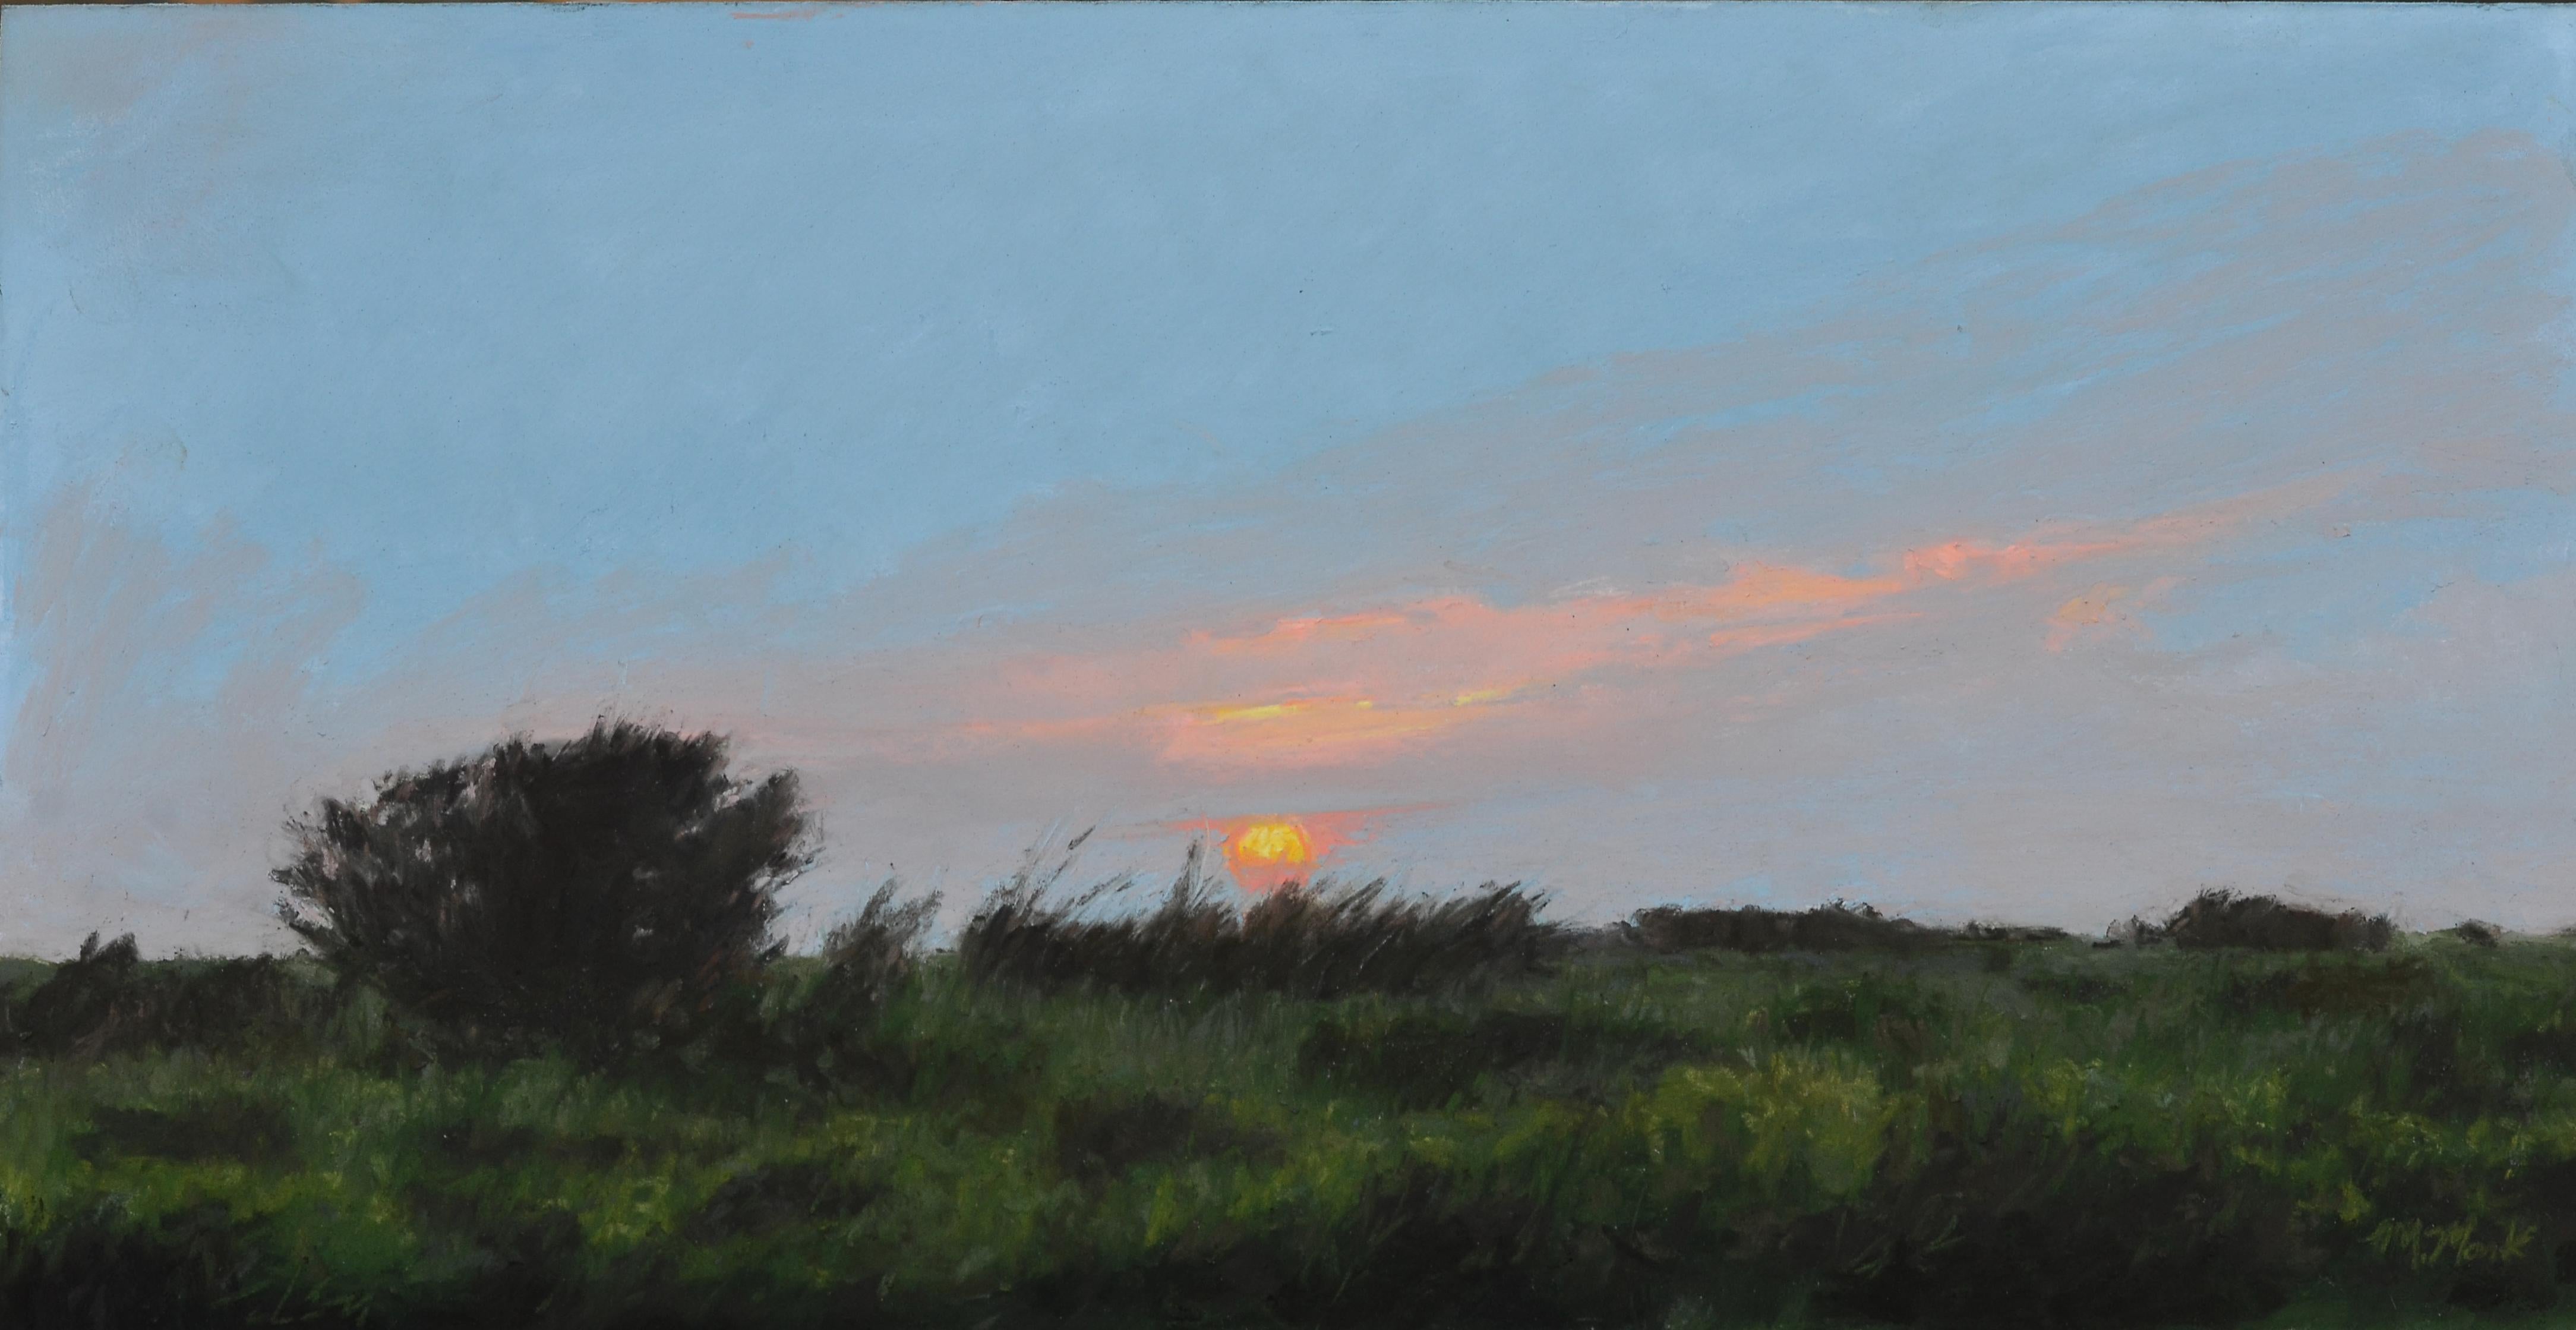 Mary Monk Landscape Art - "Days End" soft pastel on paper, en plein air landscape, sunset over marshy land